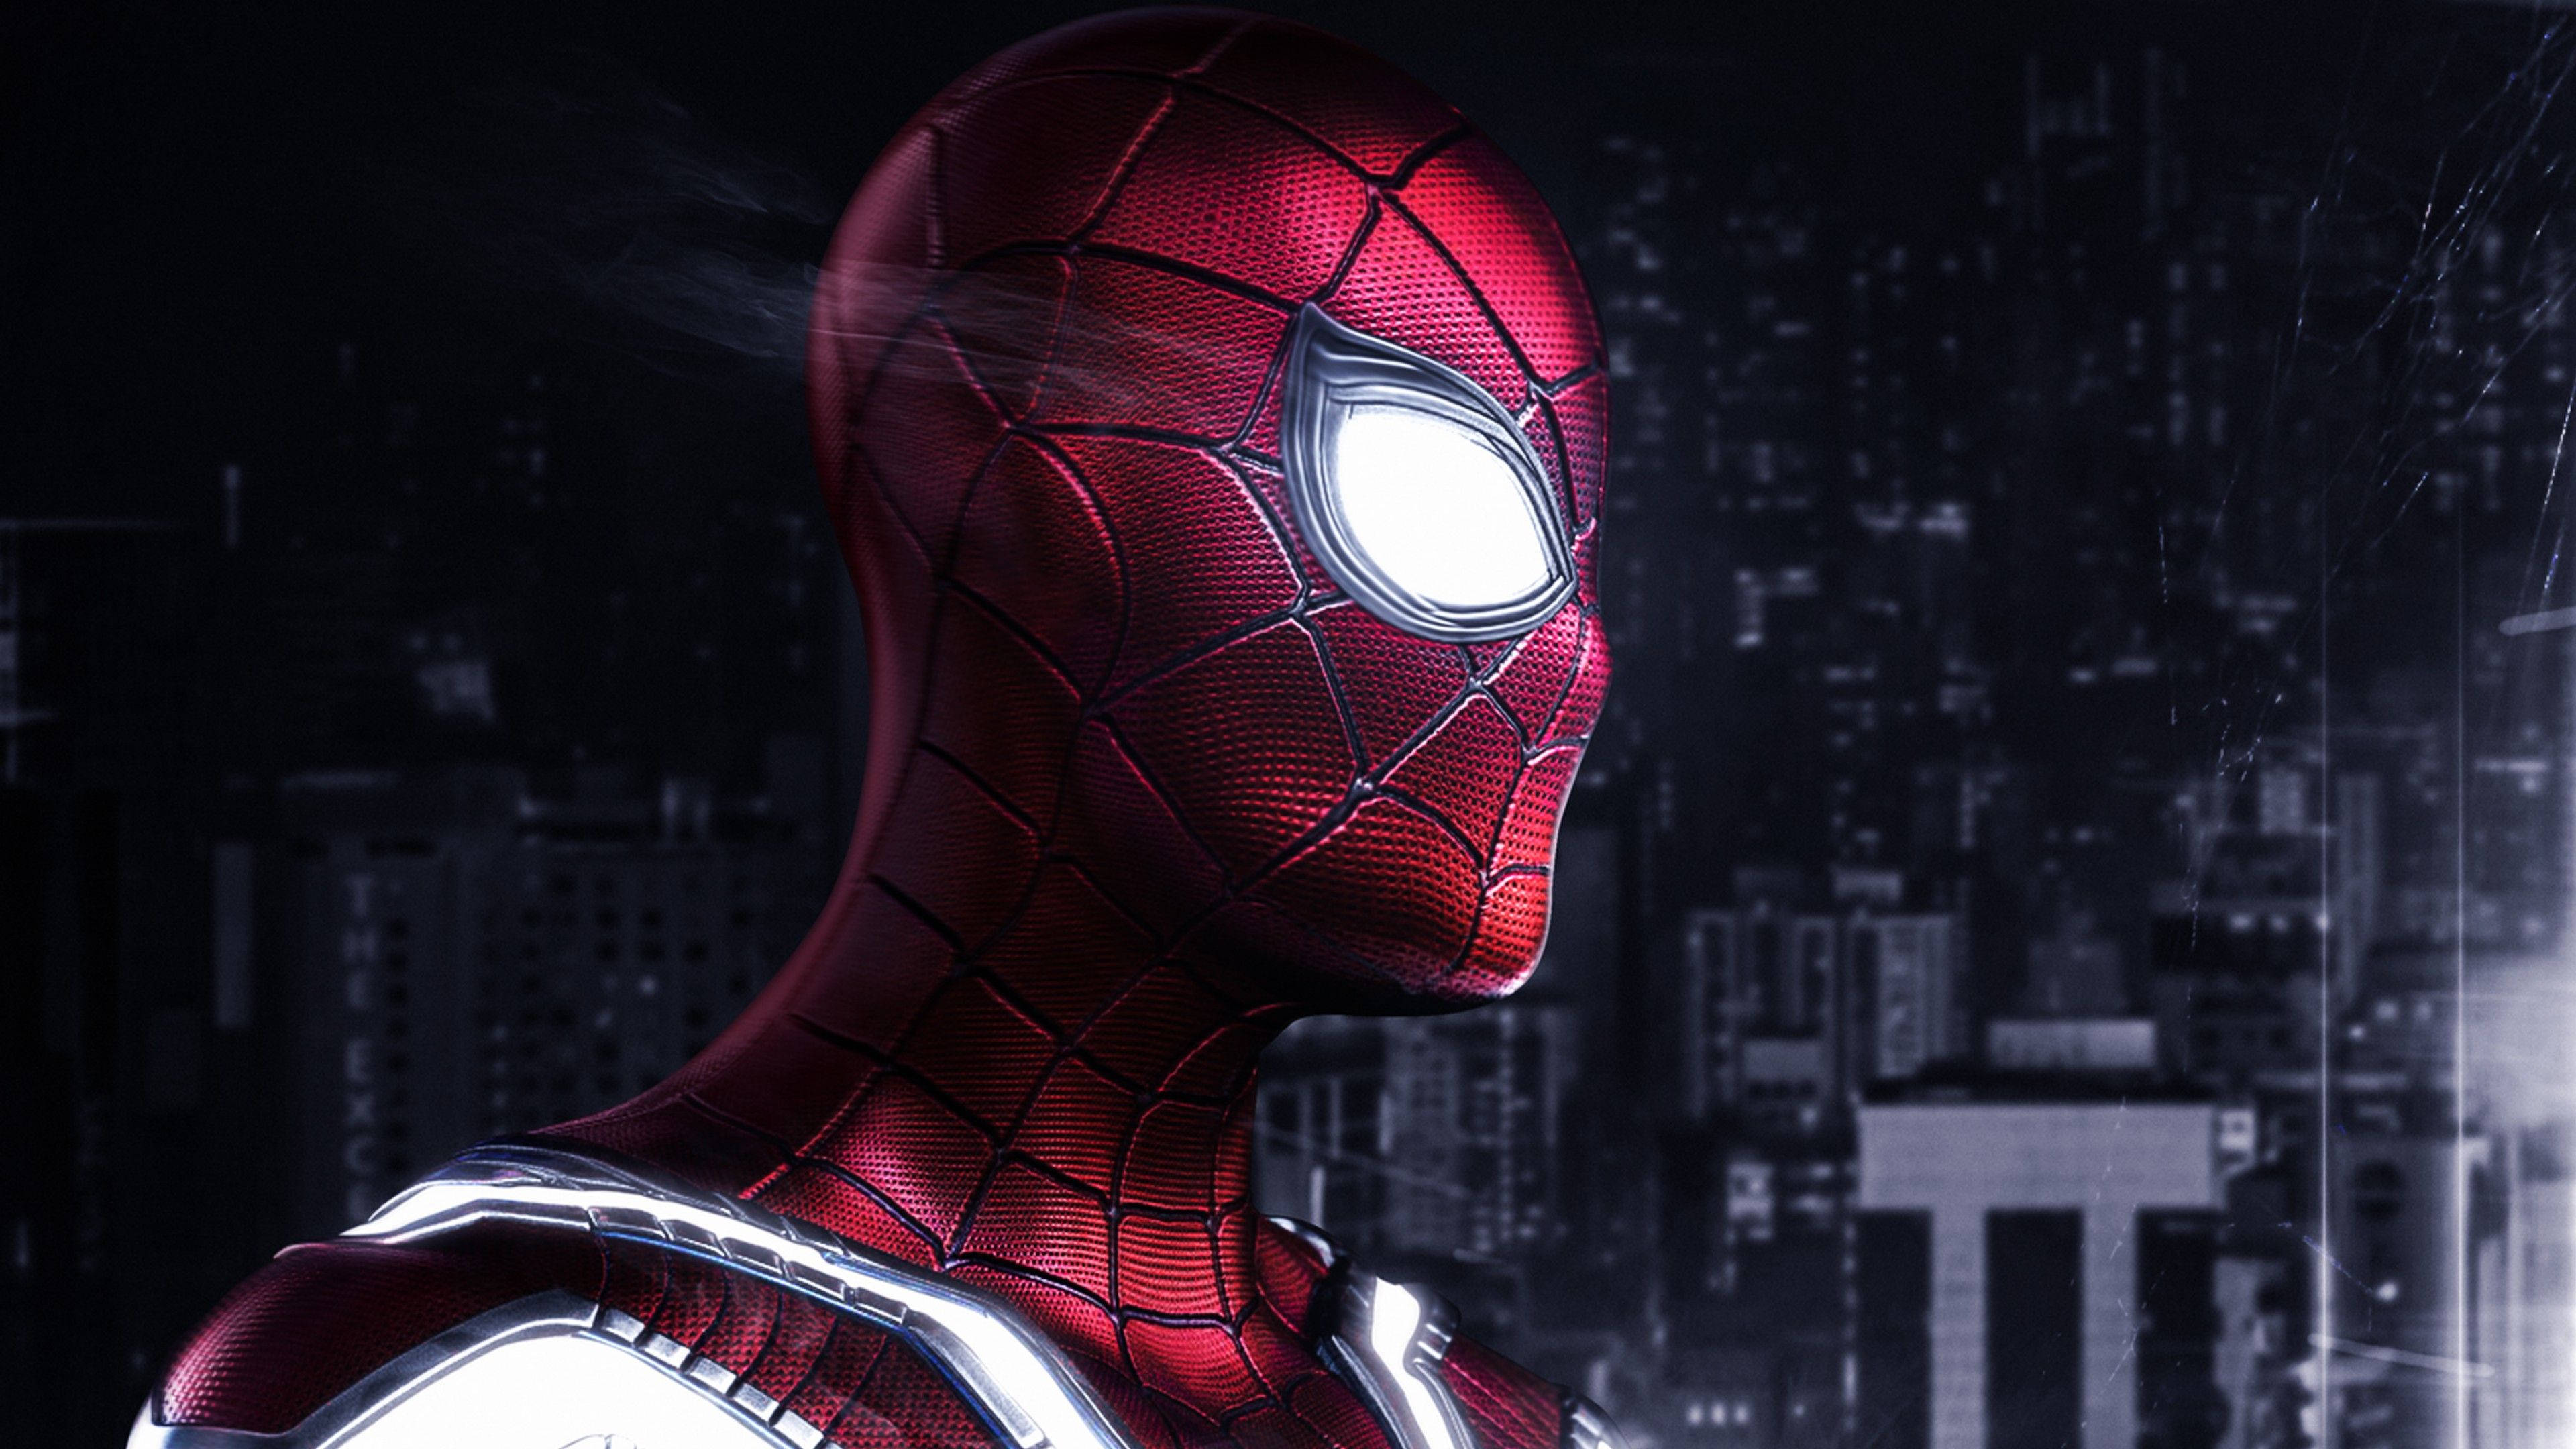 Spiderman Iron Spider Nighttime Cityscape Background